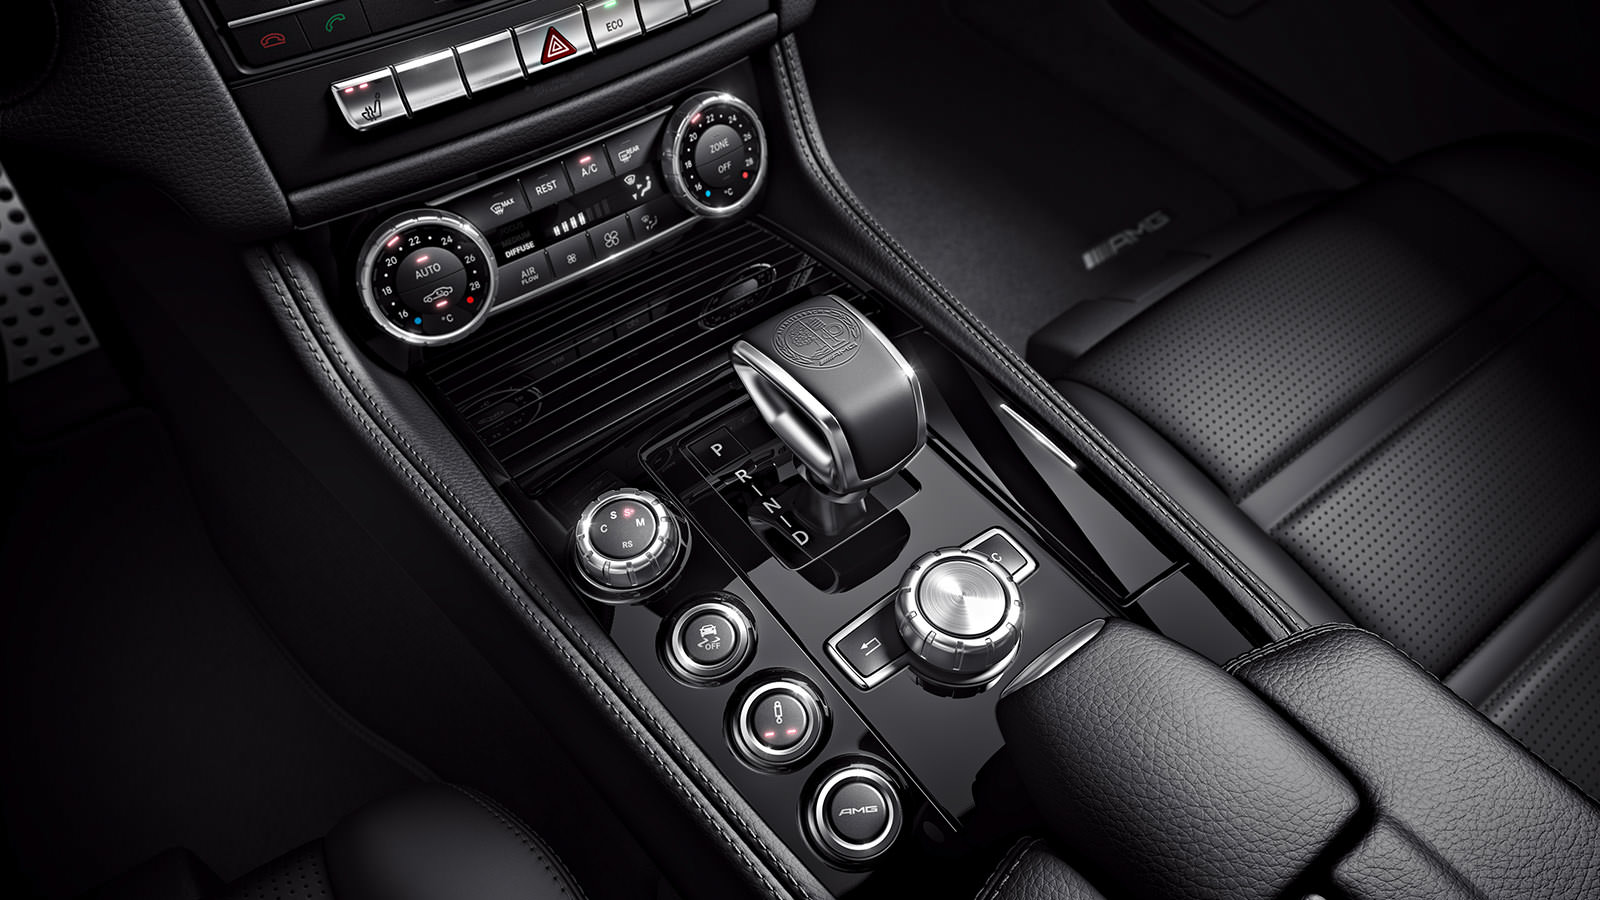 Mercedes Benz AMG CLS 63 S interior gear view